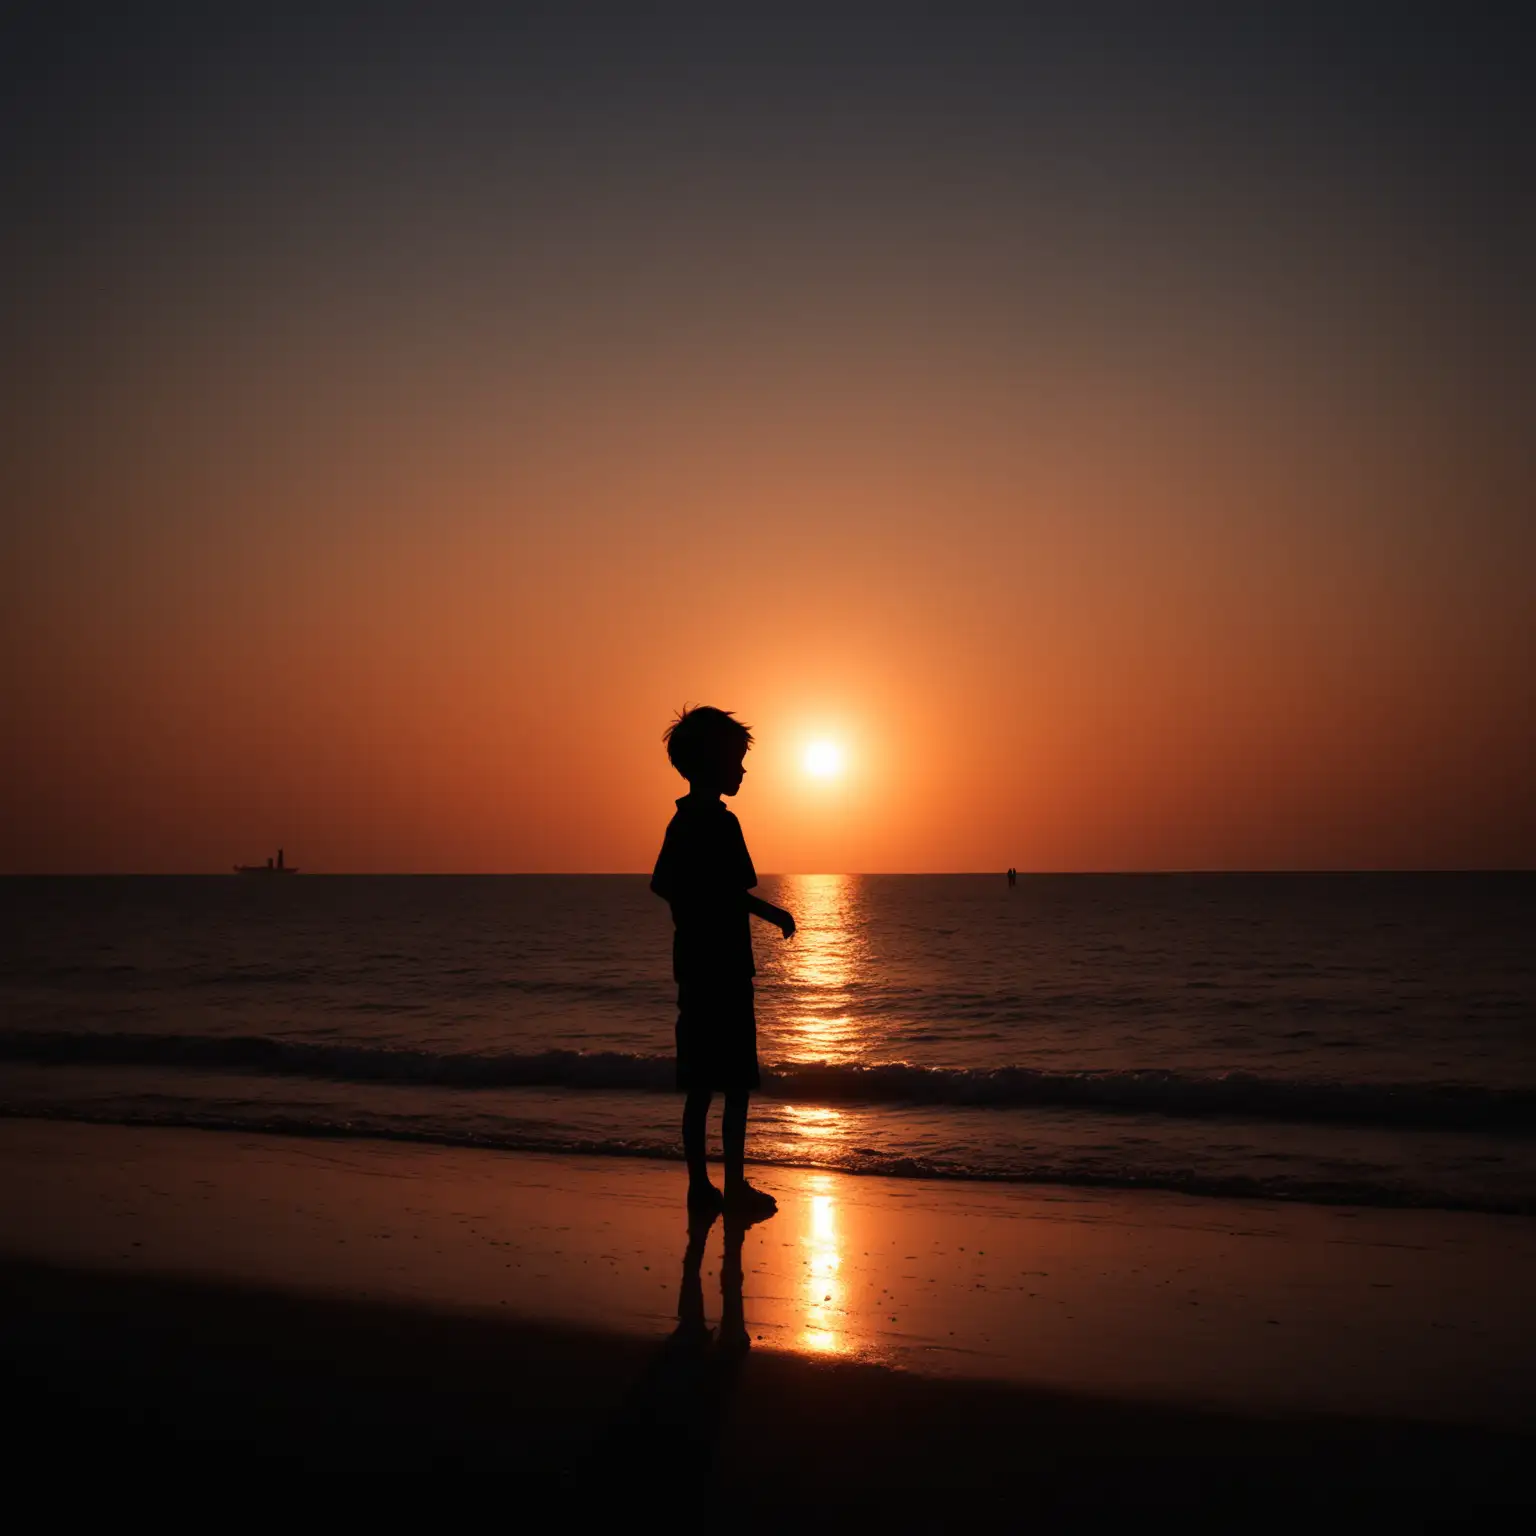 Seaside-Sunset-Silhouette-of-a-Boy